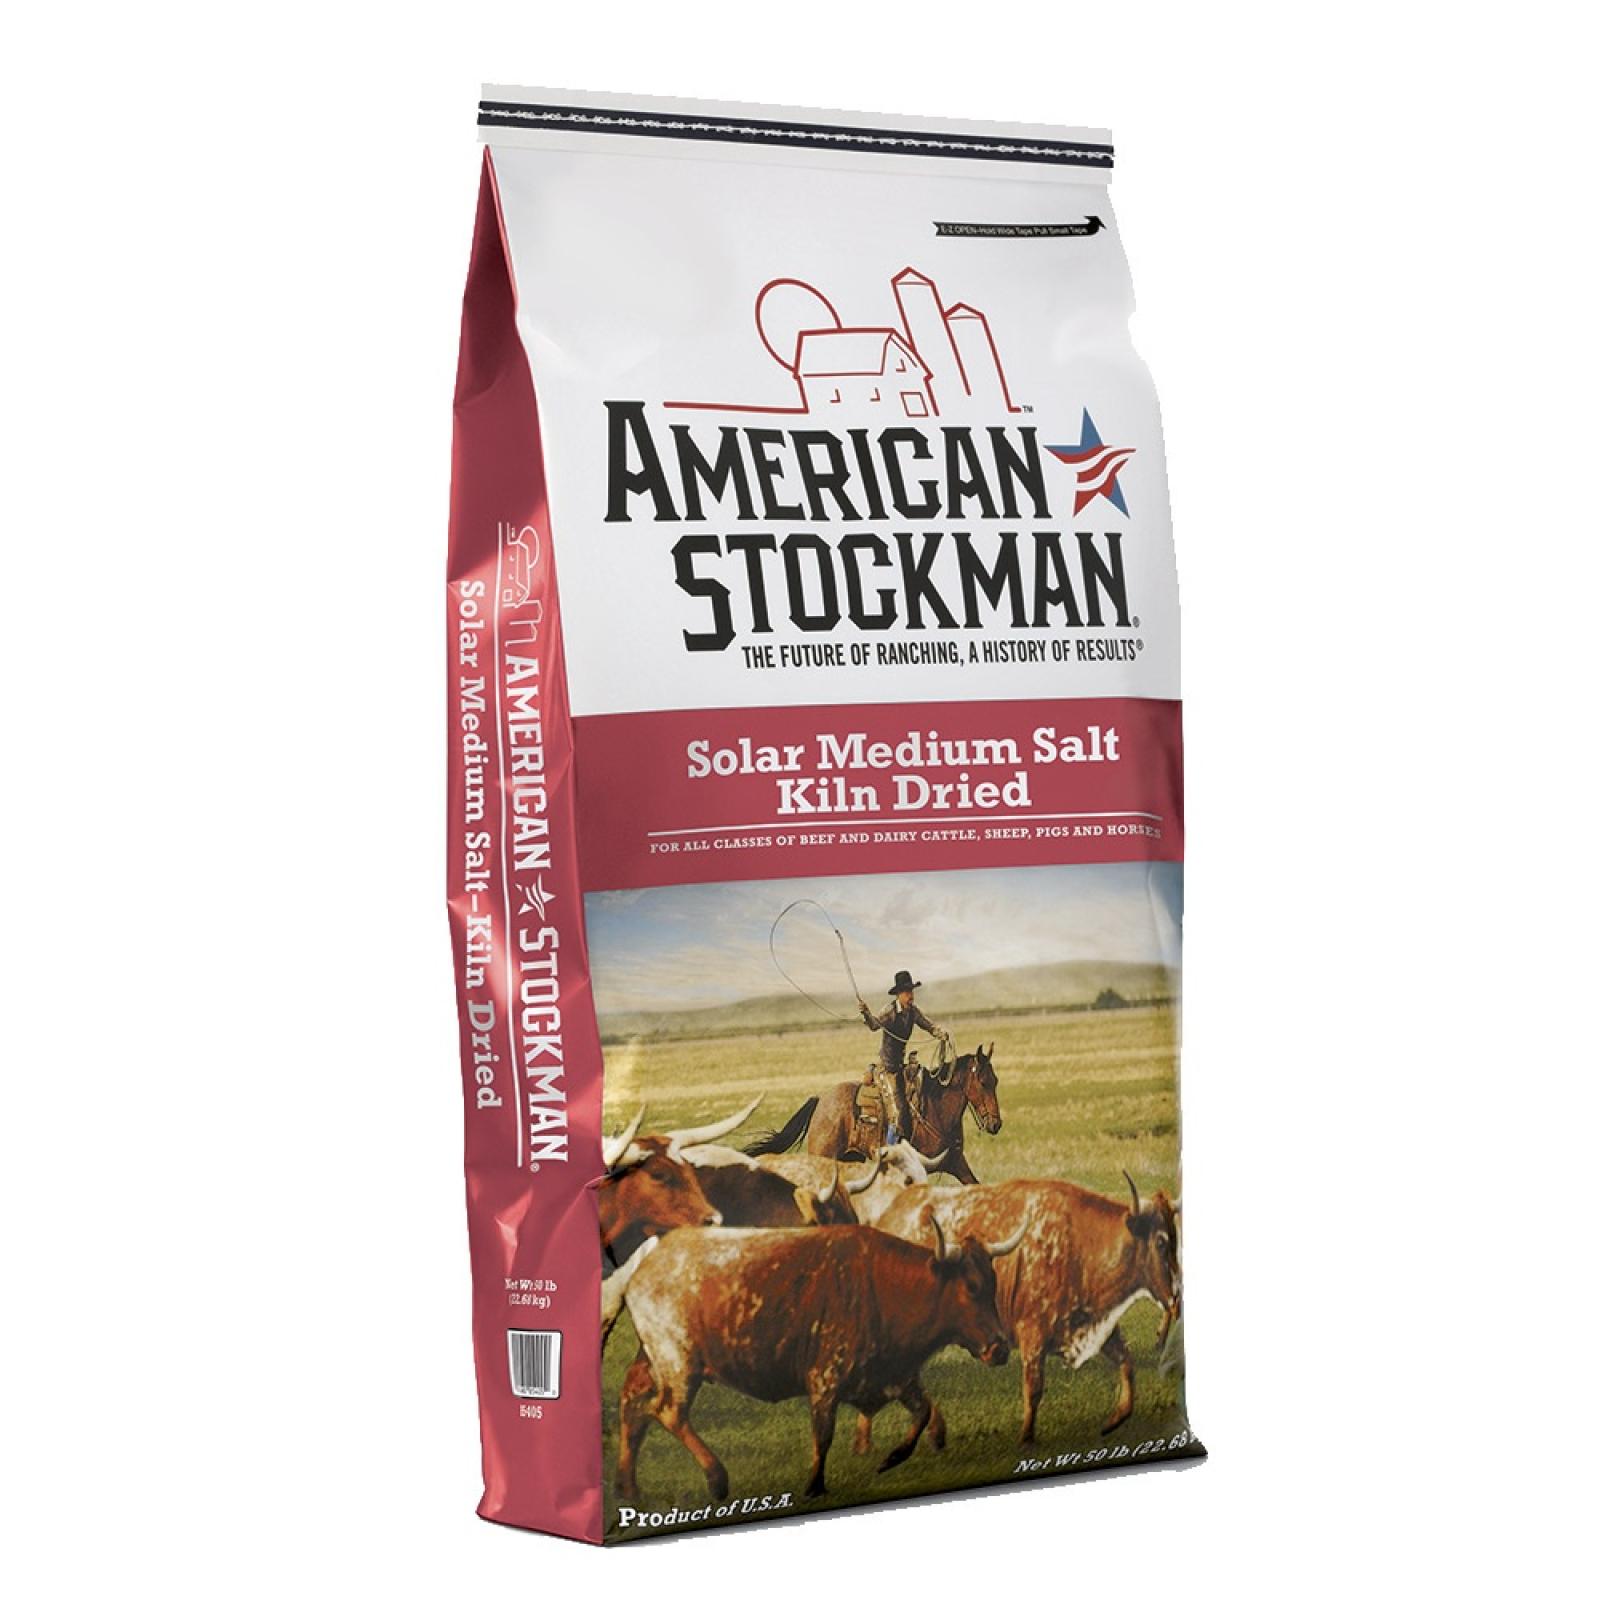 American Stockman Solar Medium Salt